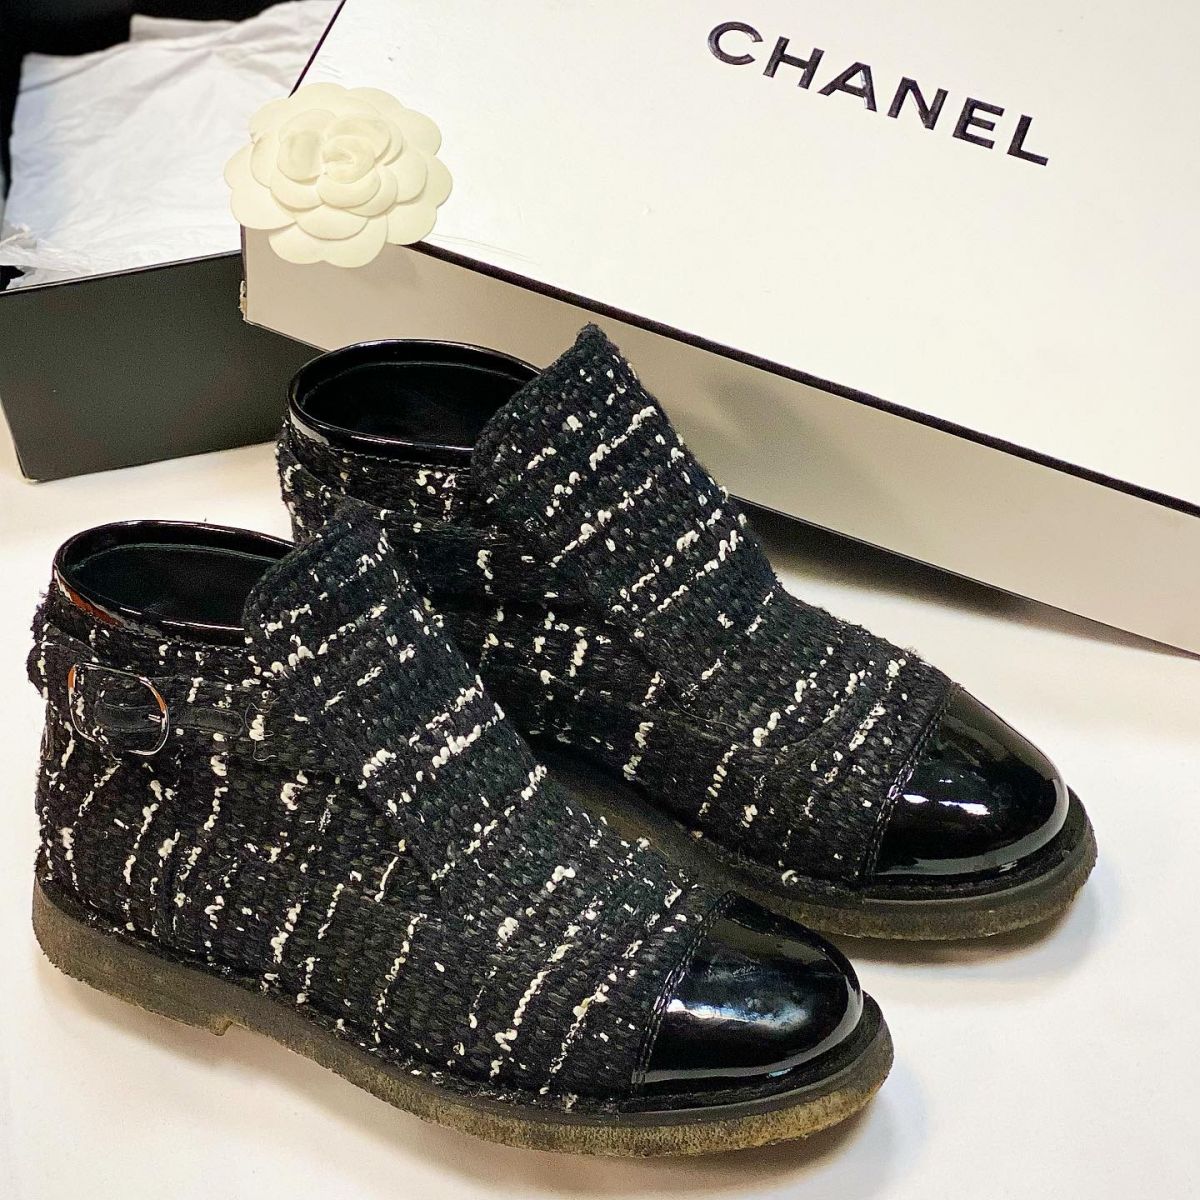 Ботинки / твид / Chanel  размер 39 цена 30 770 руб 